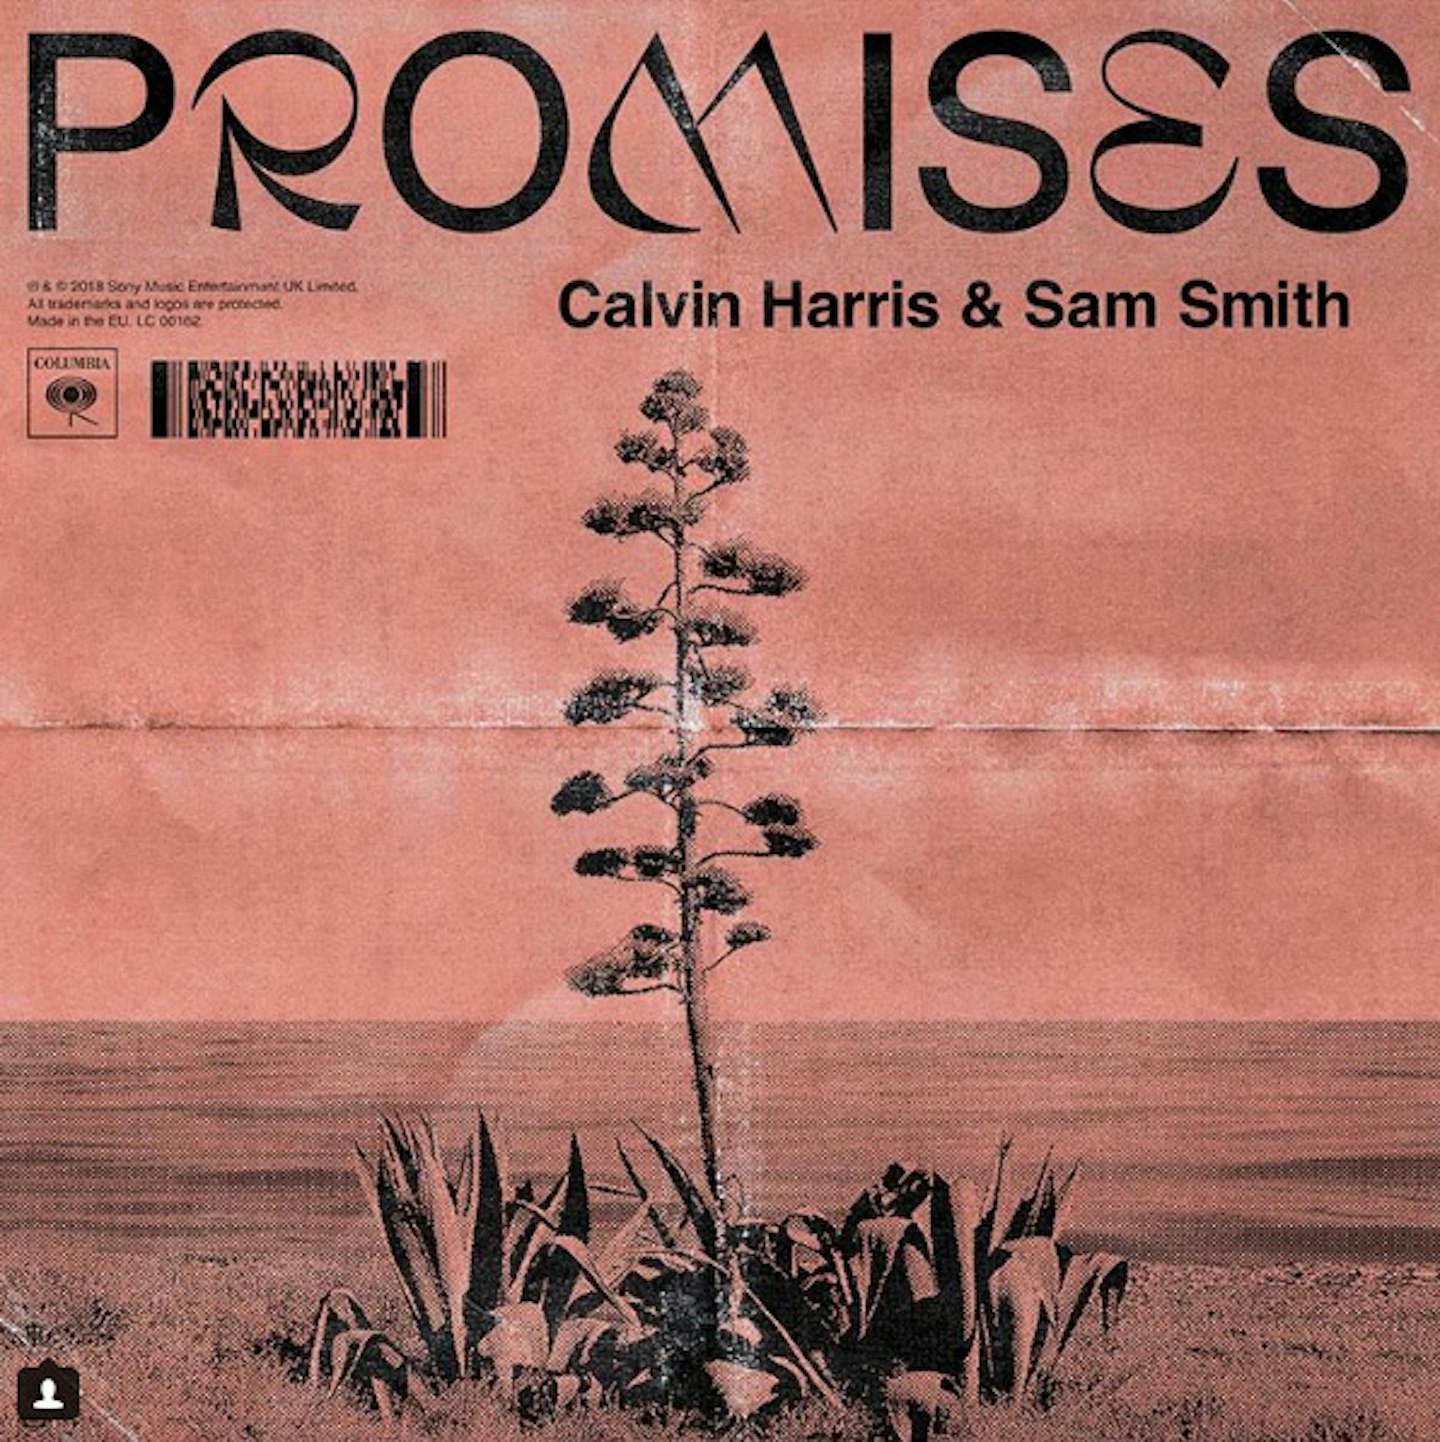 Calvin Harris and Sam Smith